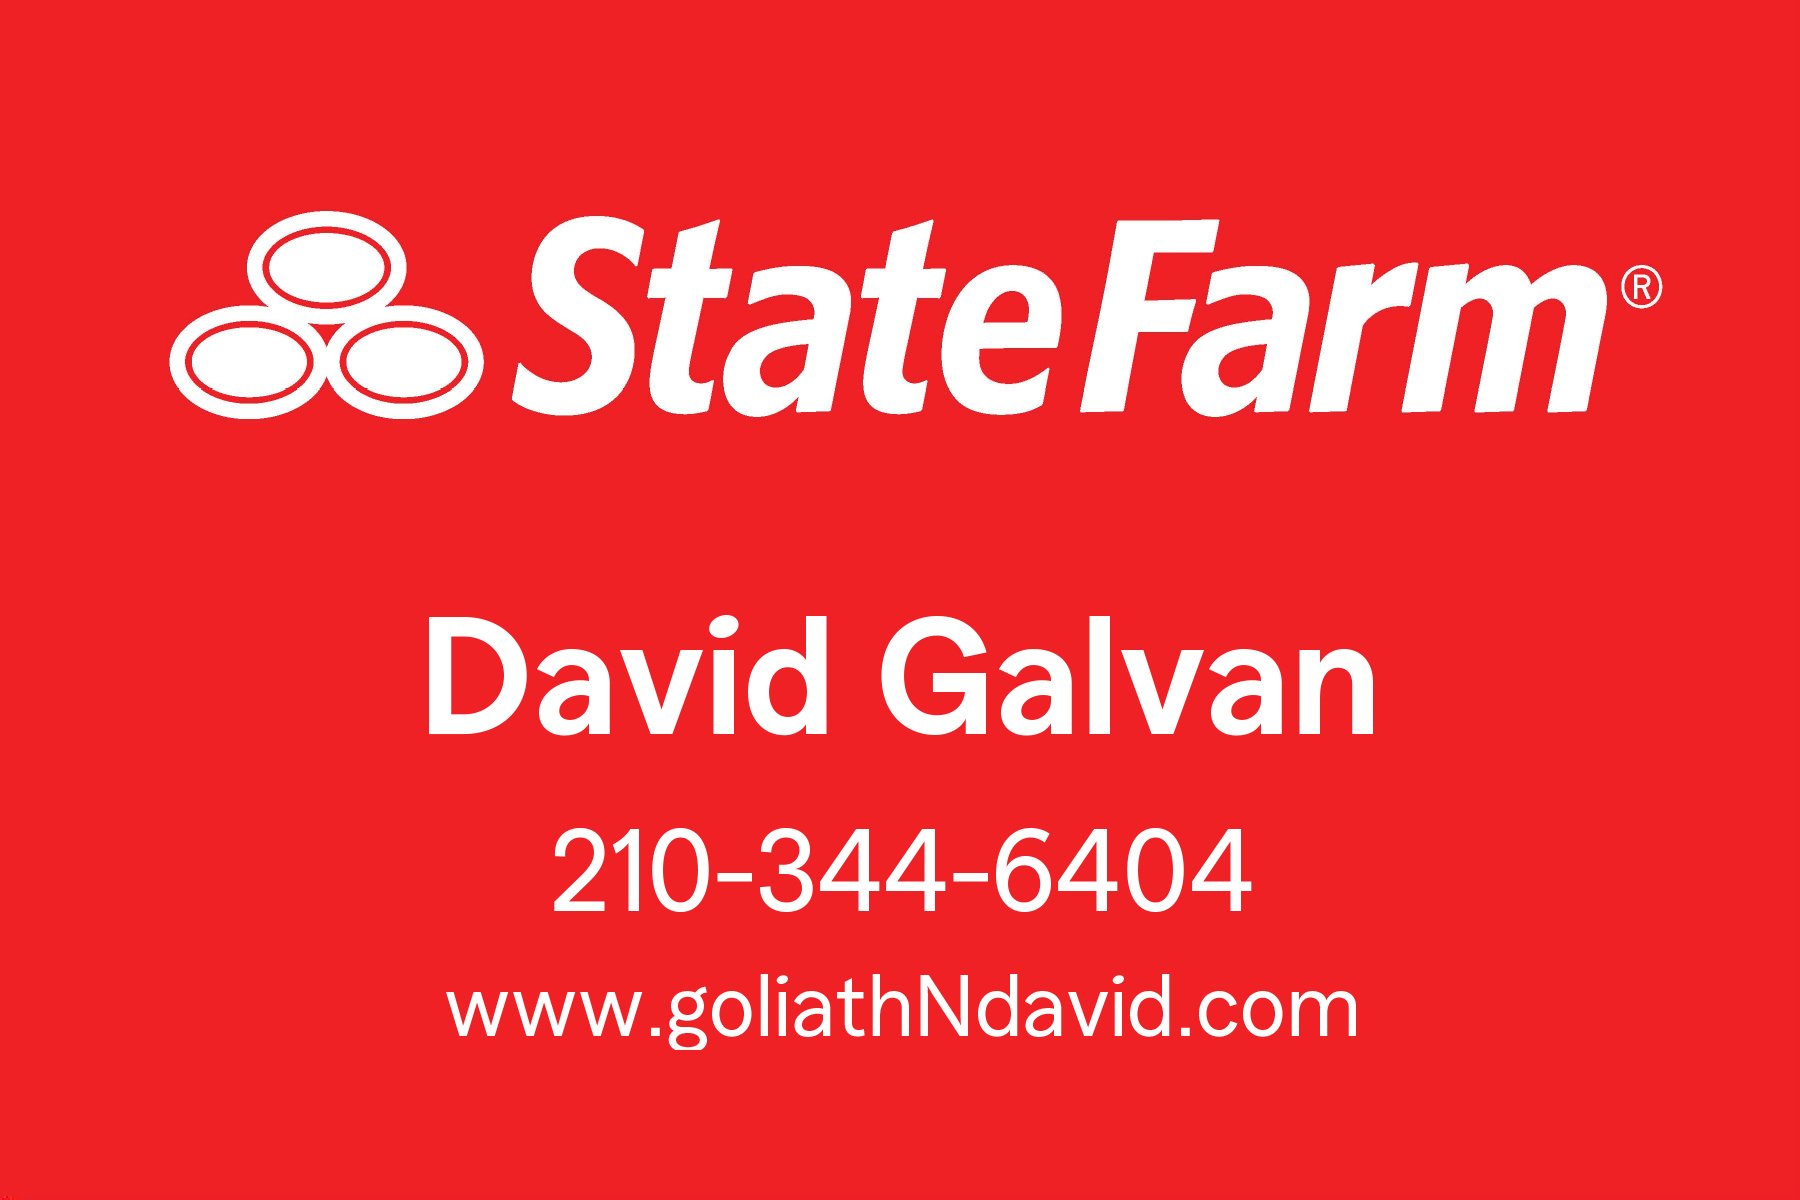 David Galvan State Farm logo.jpg